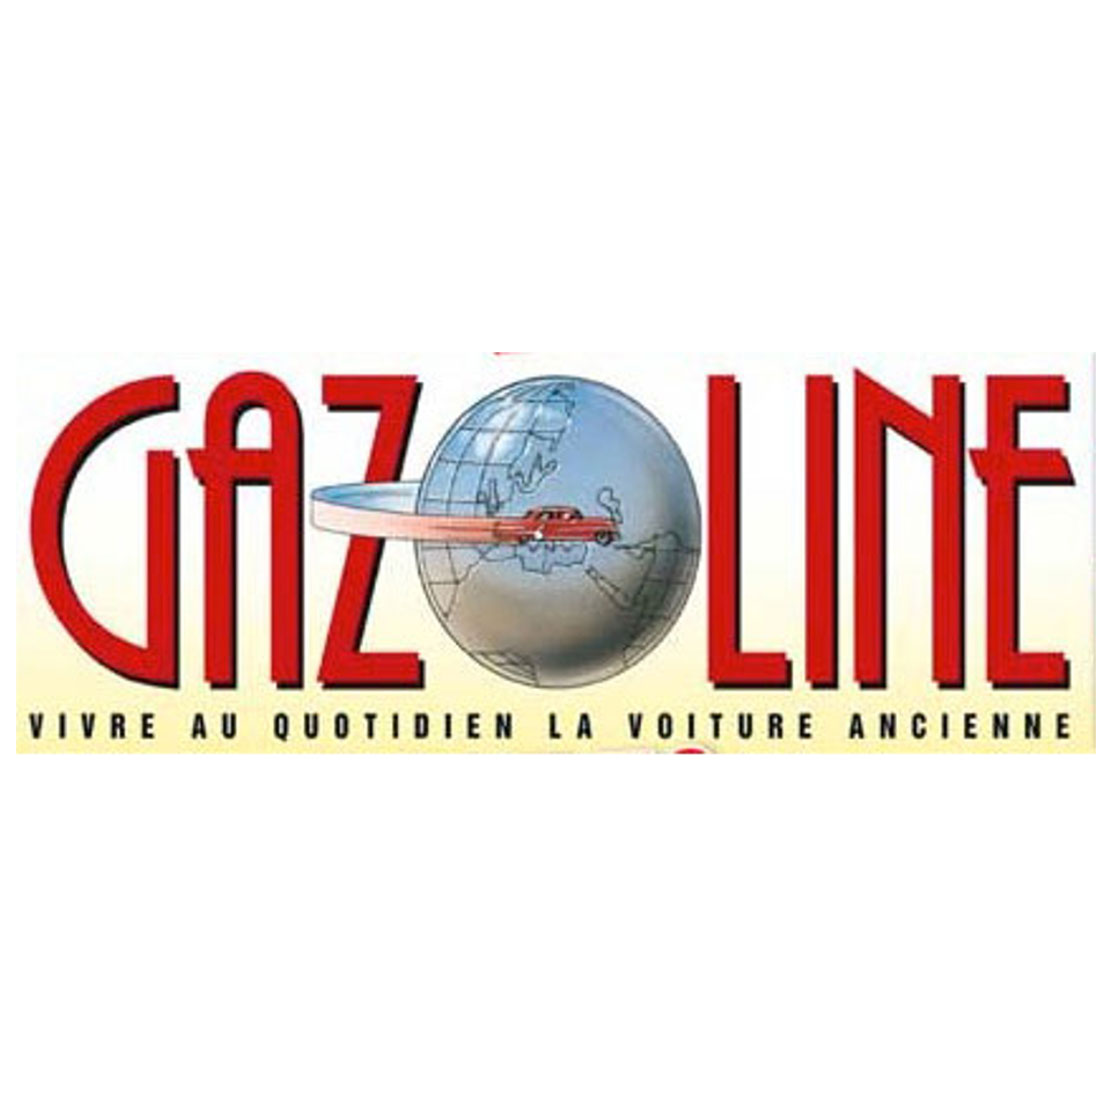 Gazoline